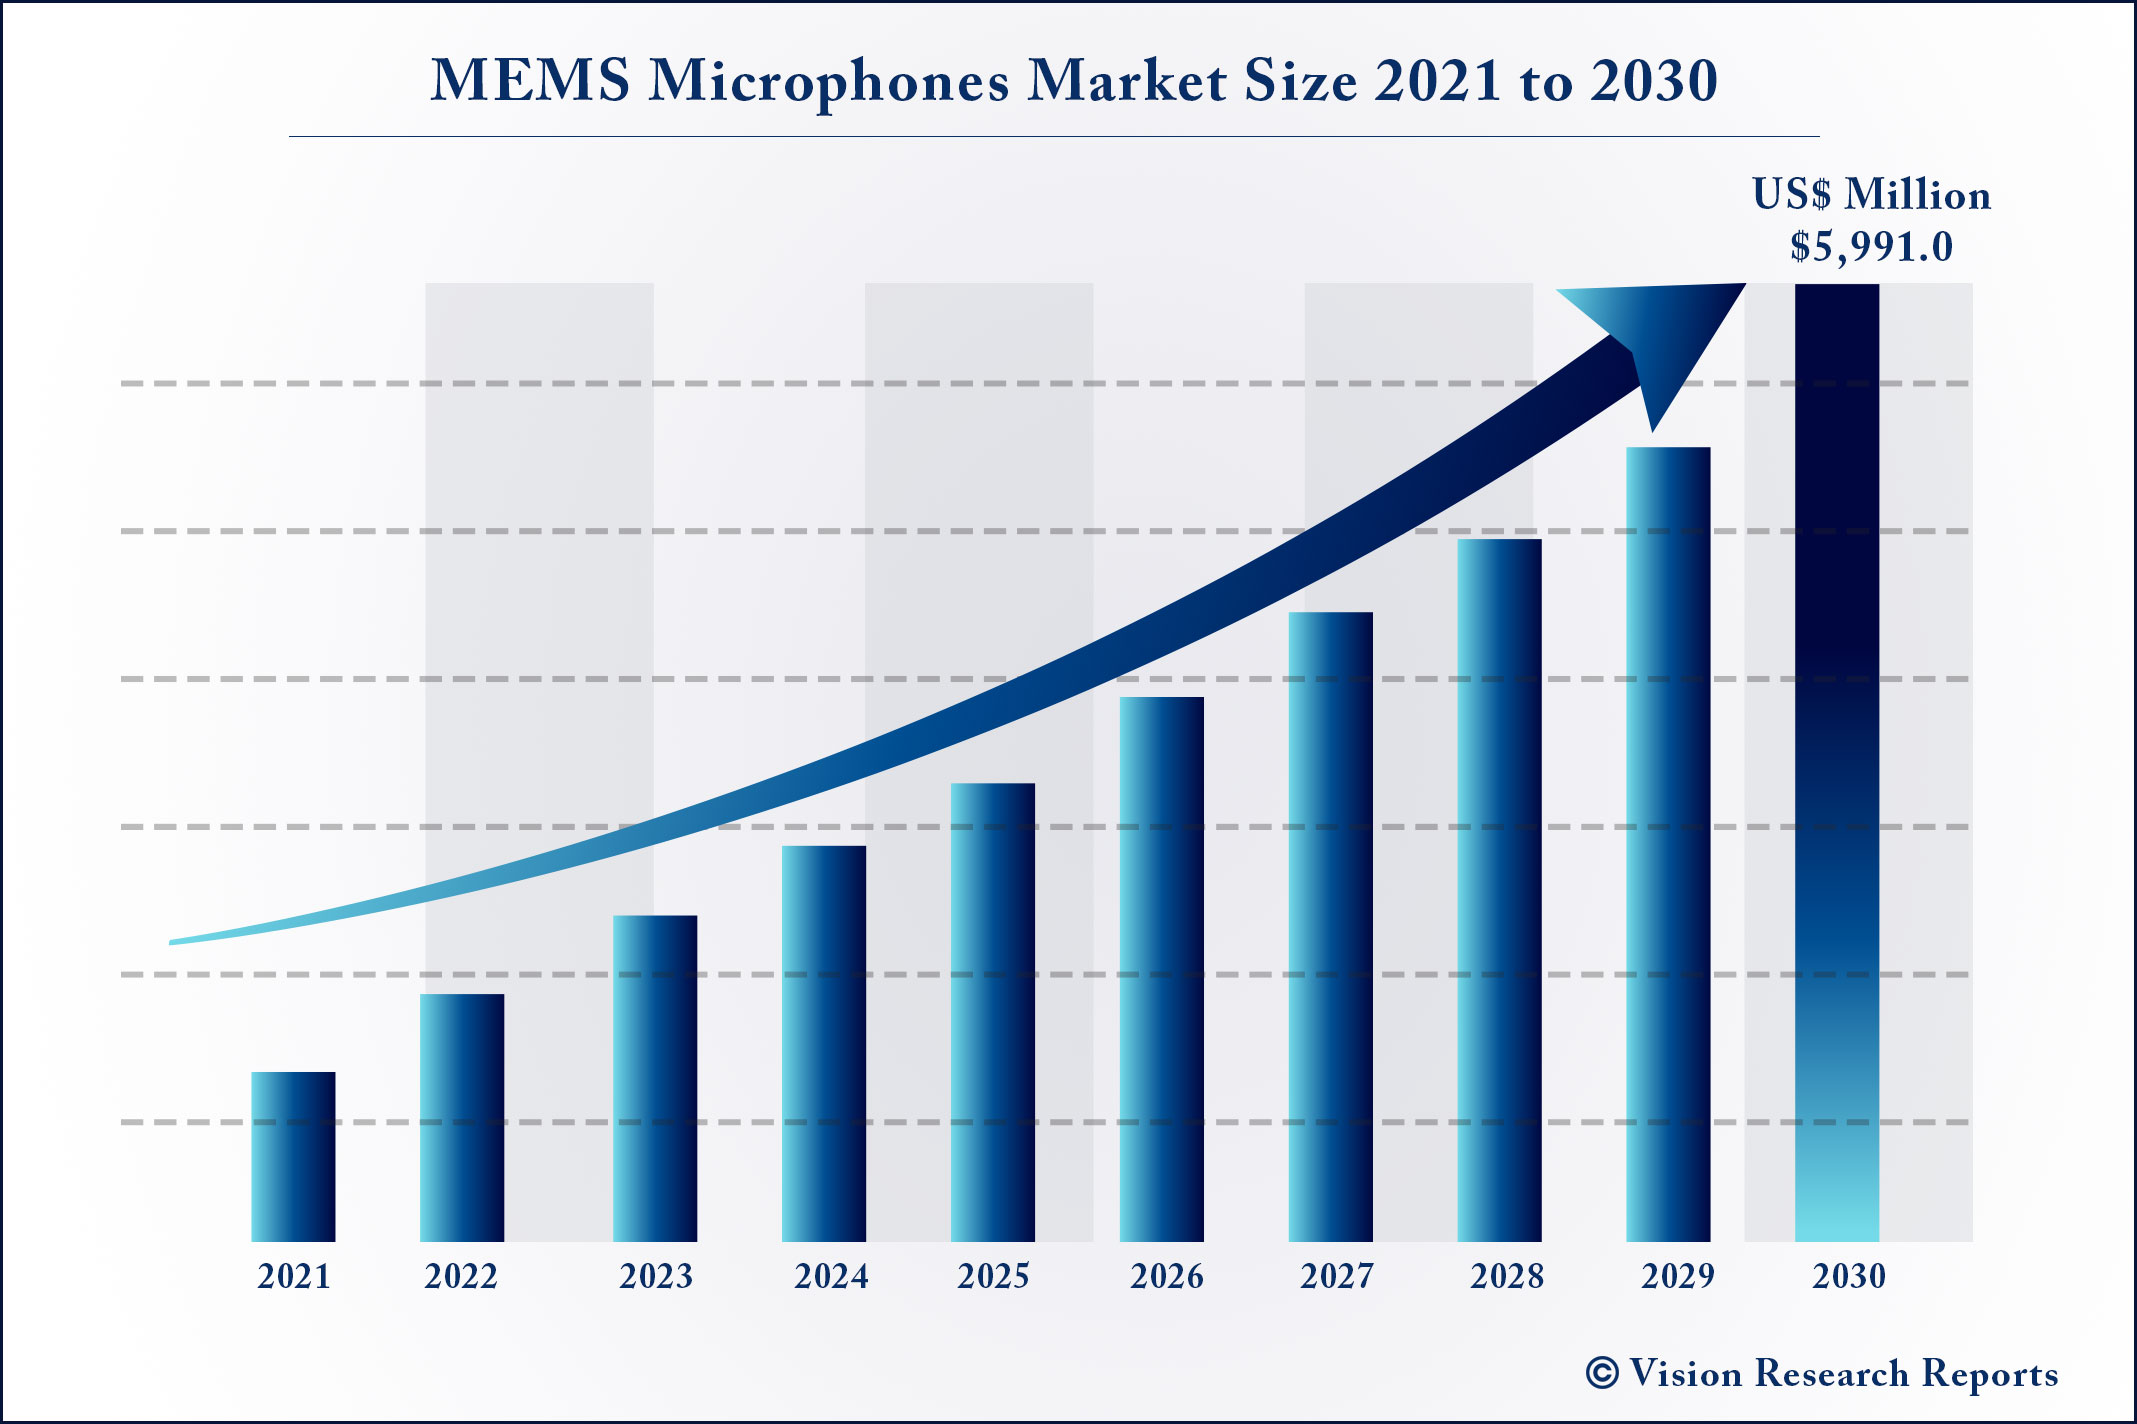 MEMS Microphones Market Size 2021 to 2030